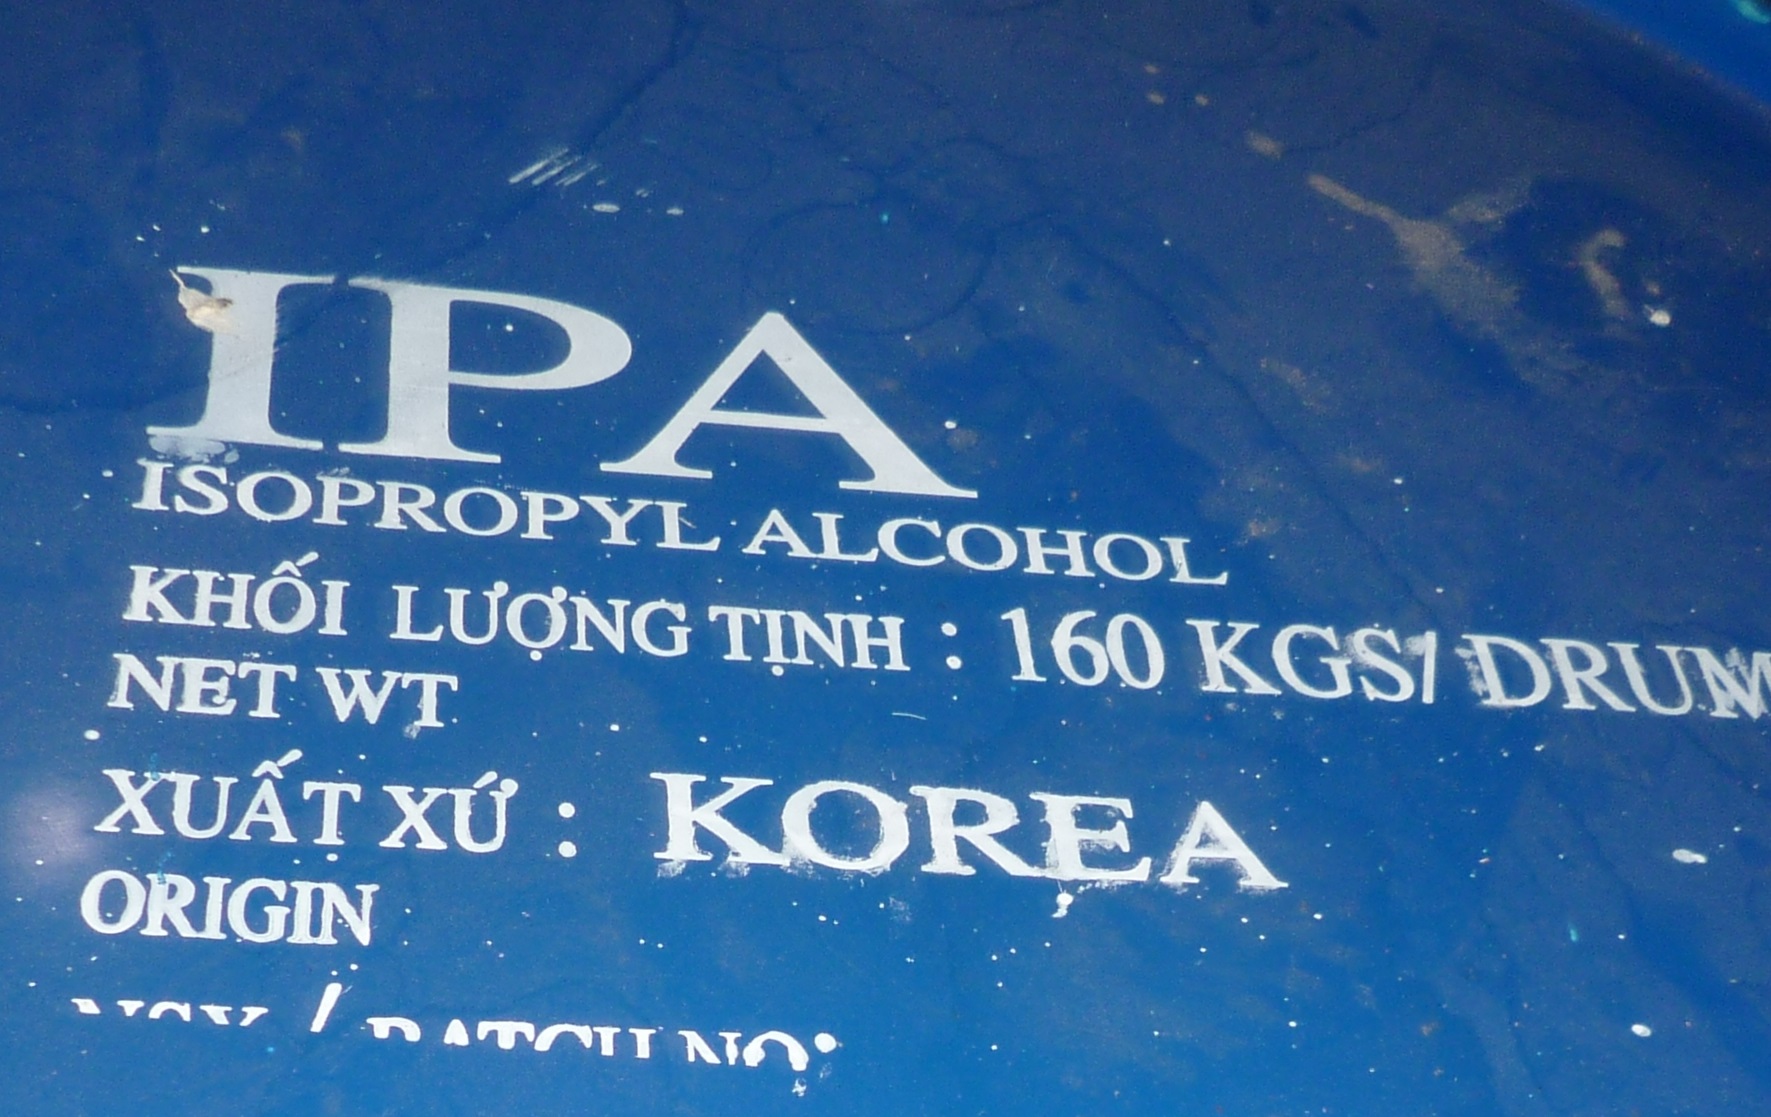 IPA - ISO PROPYL ALCOHOL